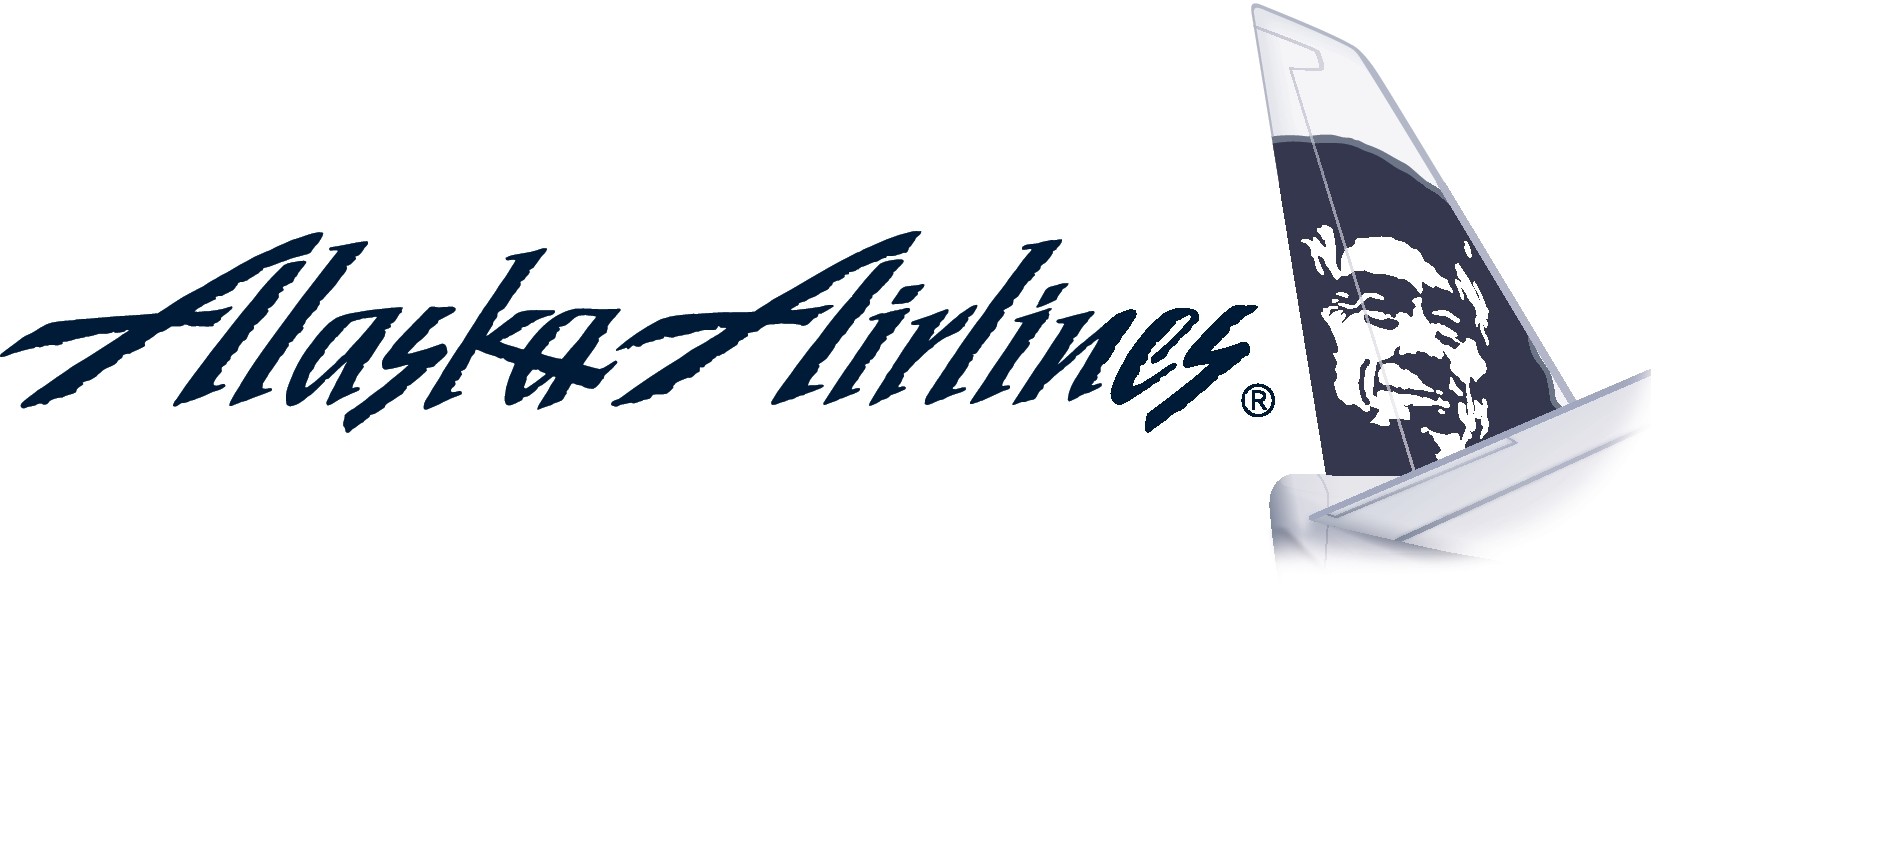 Alaska Airlines.png